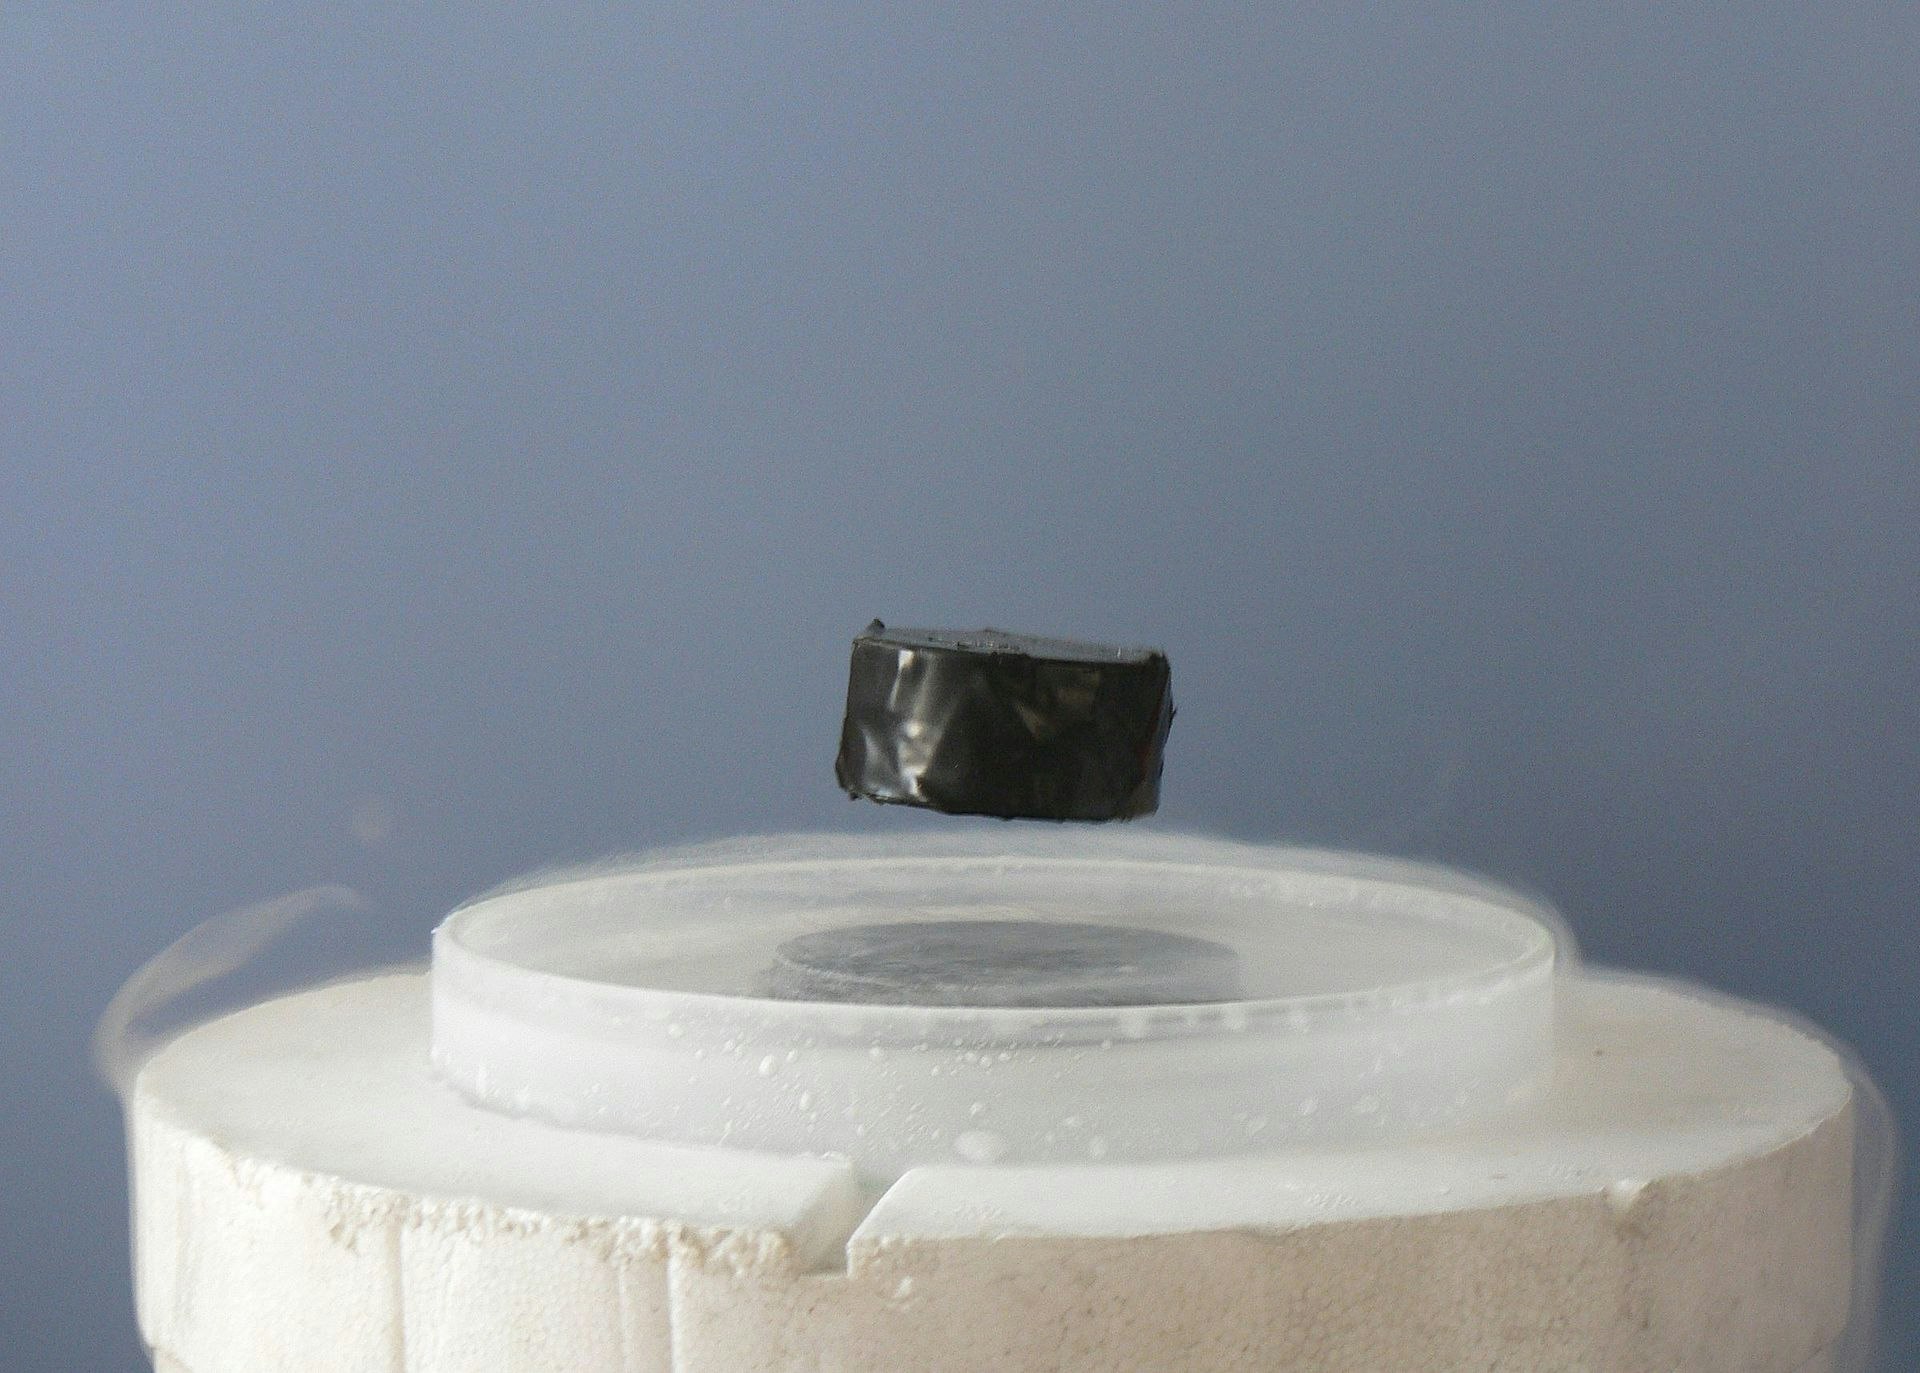 A magnet levitating above a high-temperature superconductor, cooled with liquid nitrogen. 